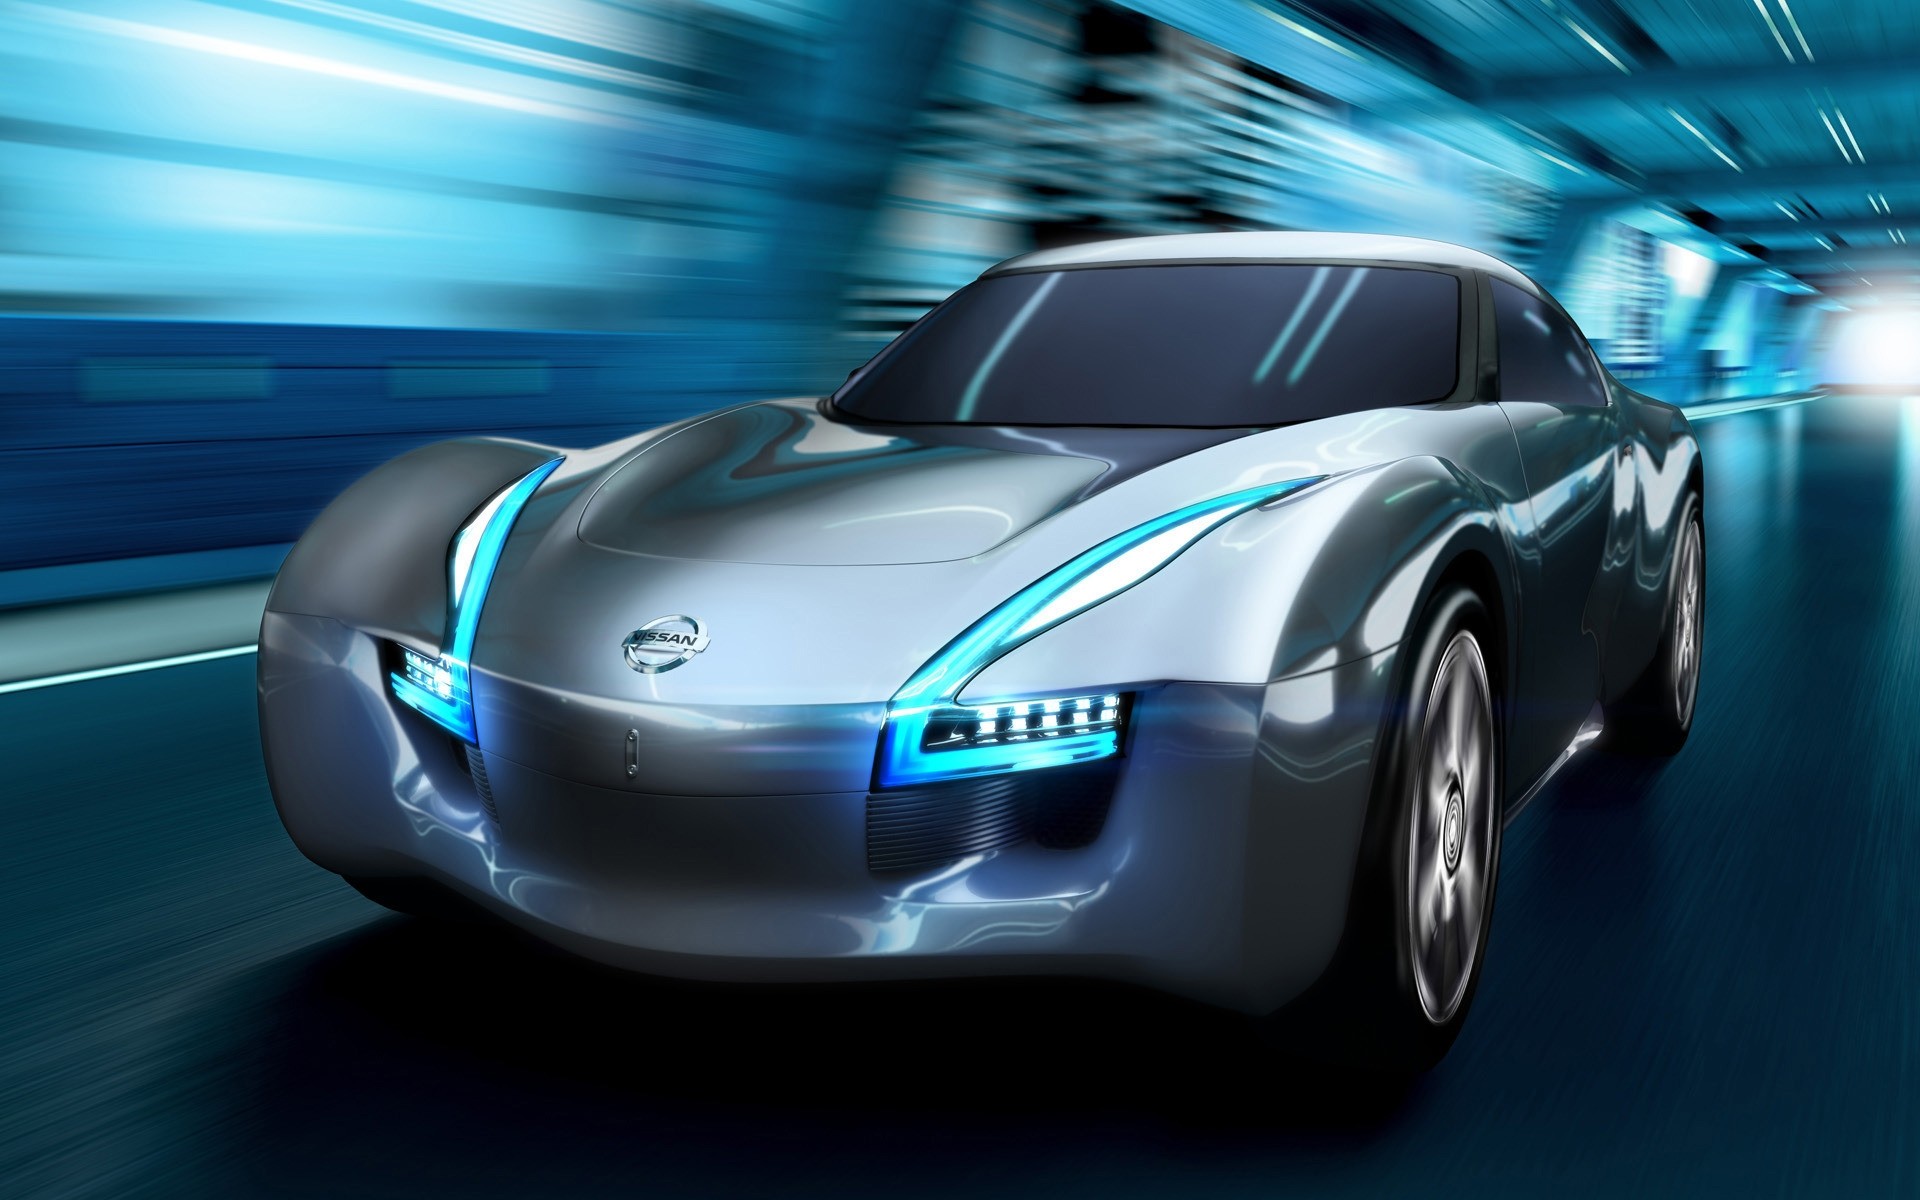 concept cars car vehicle automotive transportation system fast coupe wheel nissan concept